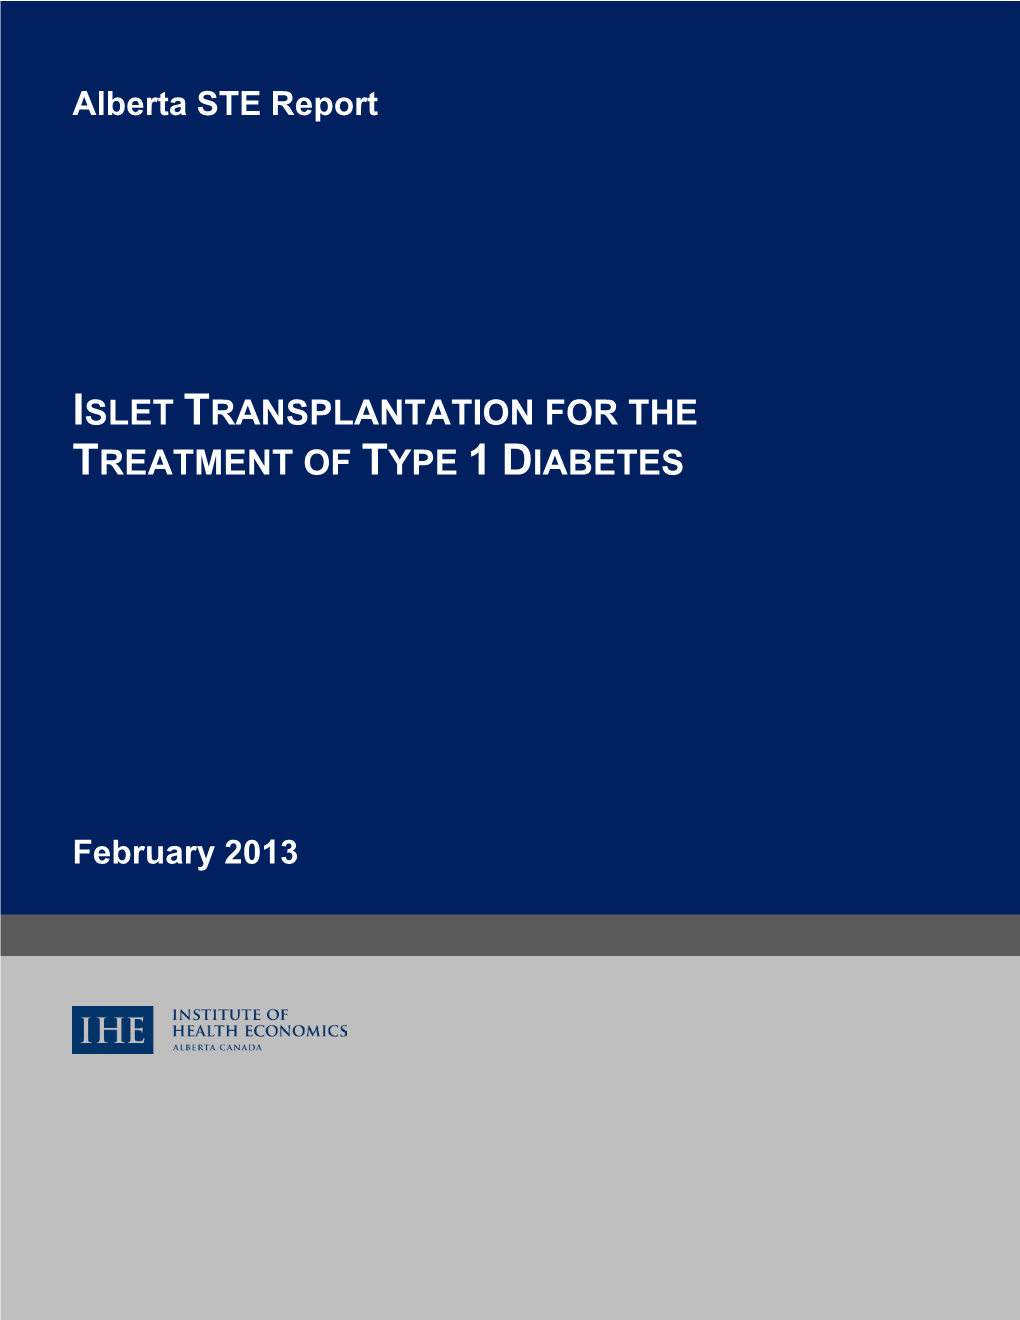 Islet Transplantation for the Treatment of Type 1 Diabetes